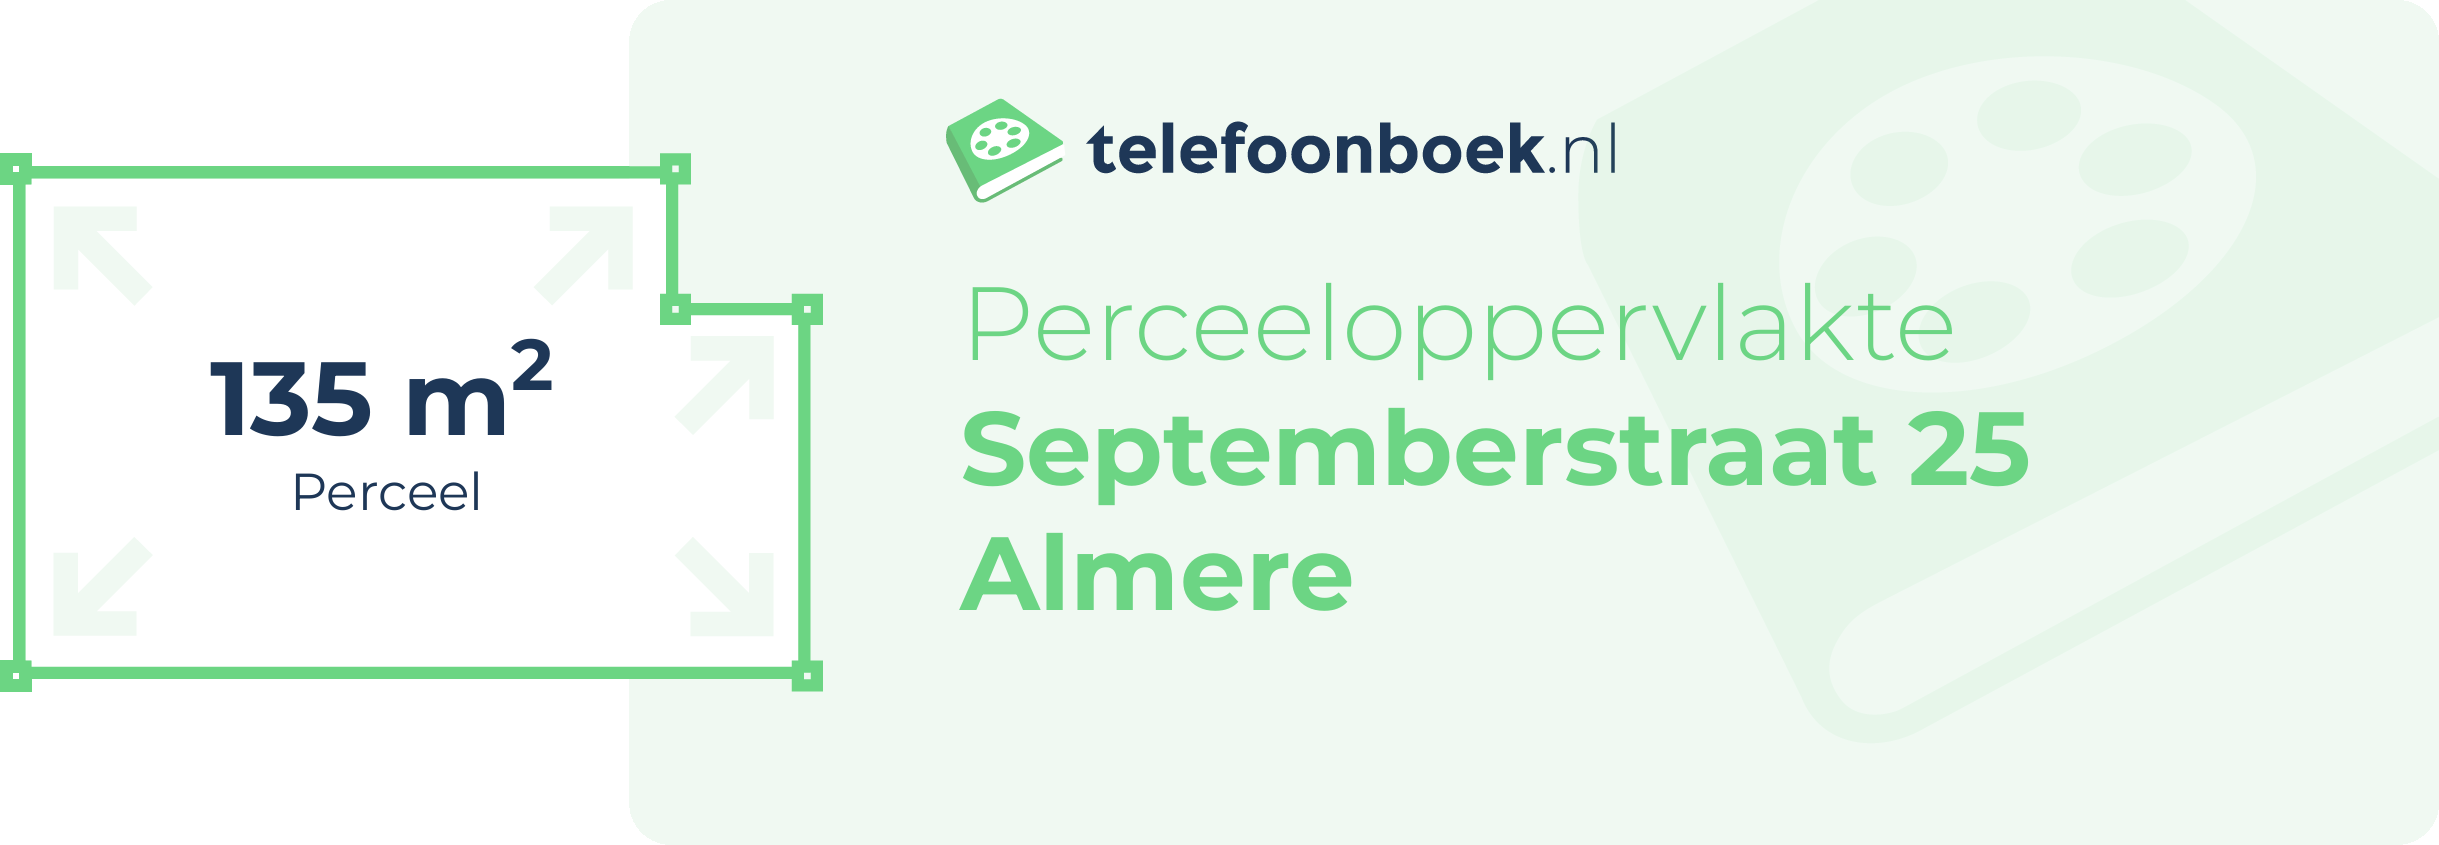 Perceeloppervlakte Septemberstraat 25 Almere